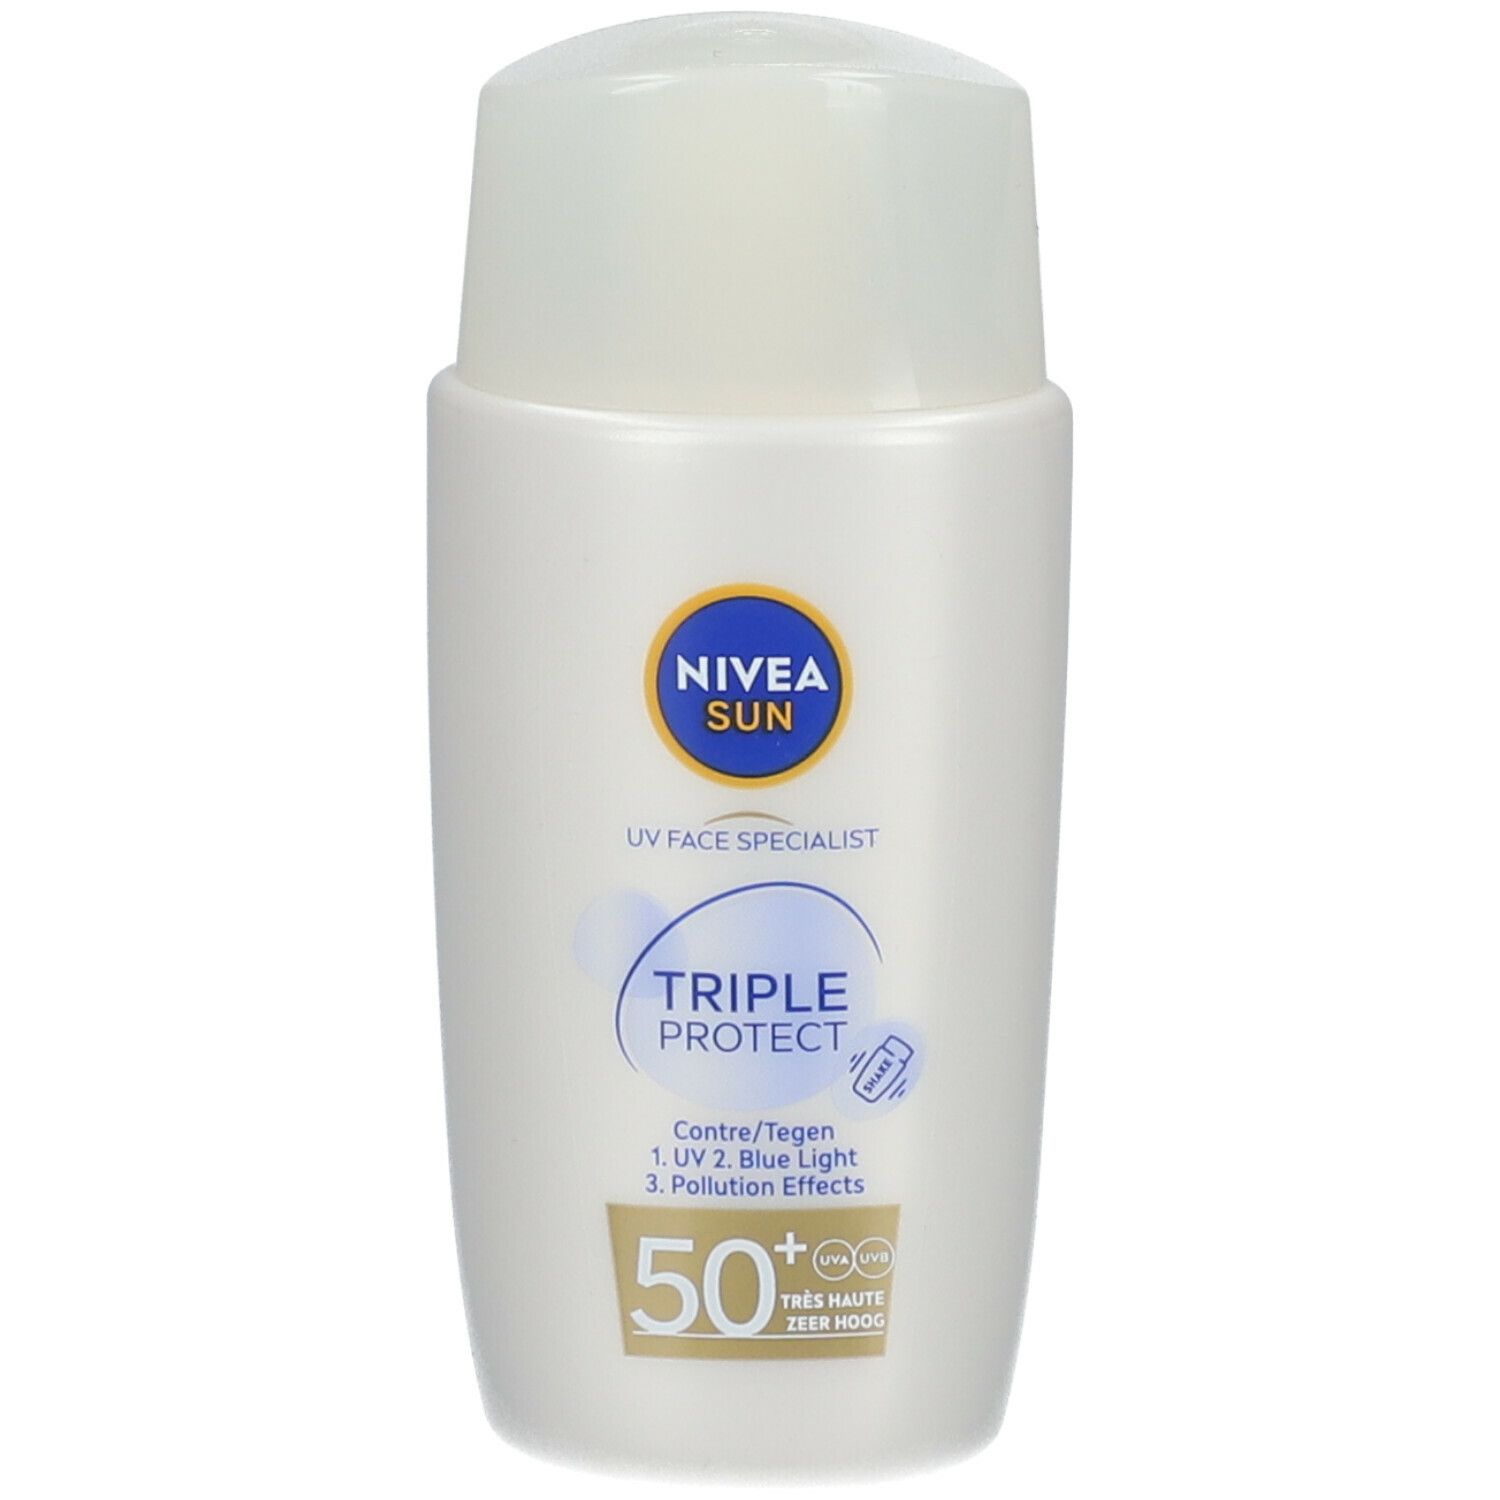 Nivea SUN UV Face Specialist Triple protection Spf50+